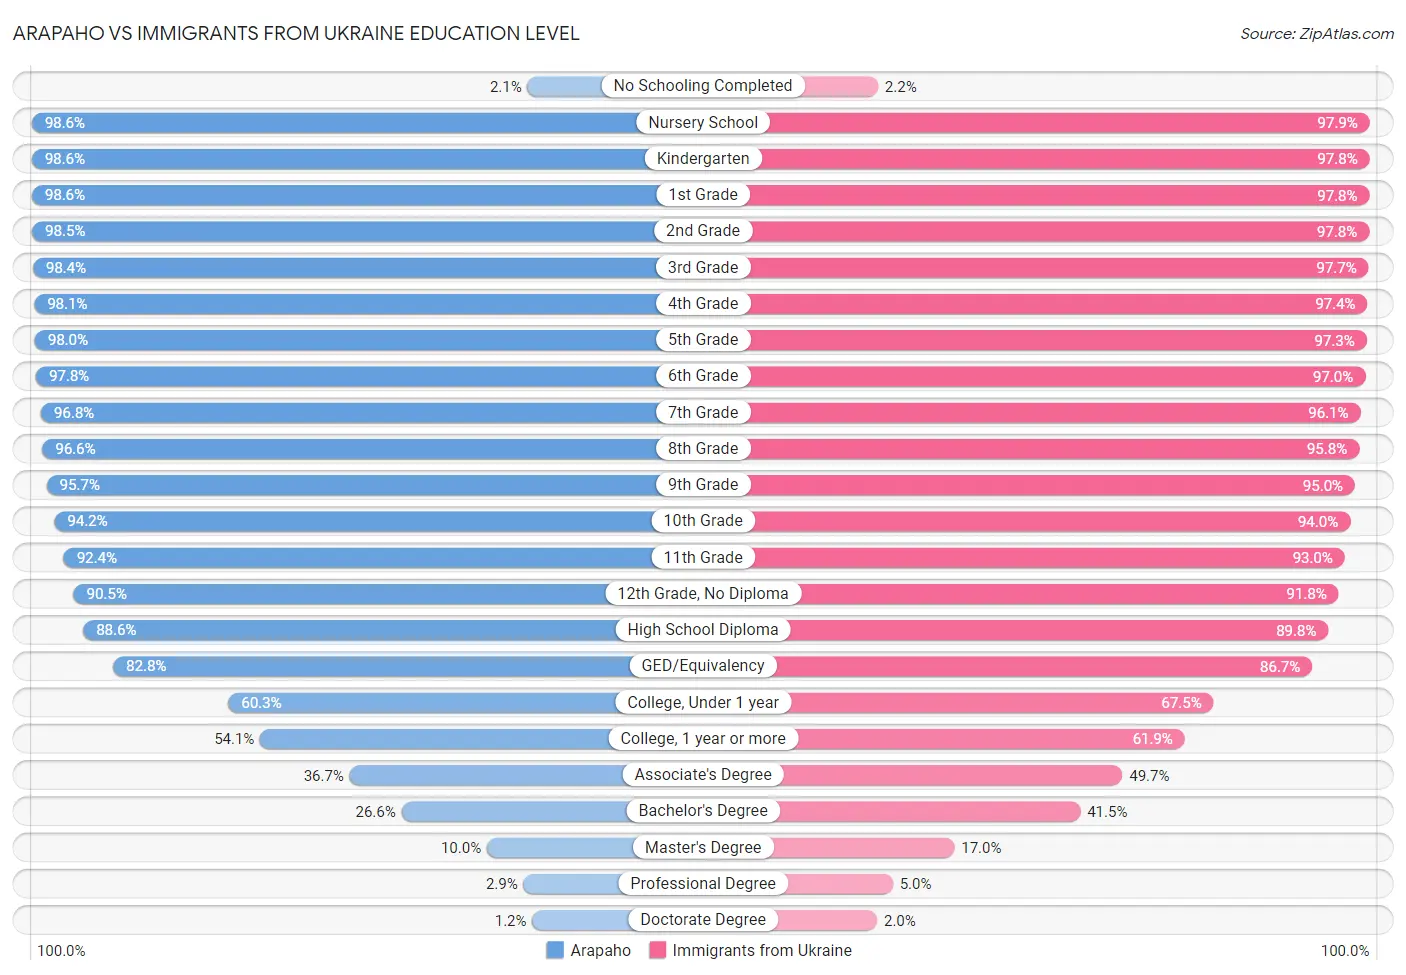 Arapaho vs Immigrants from Ukraine Education Level